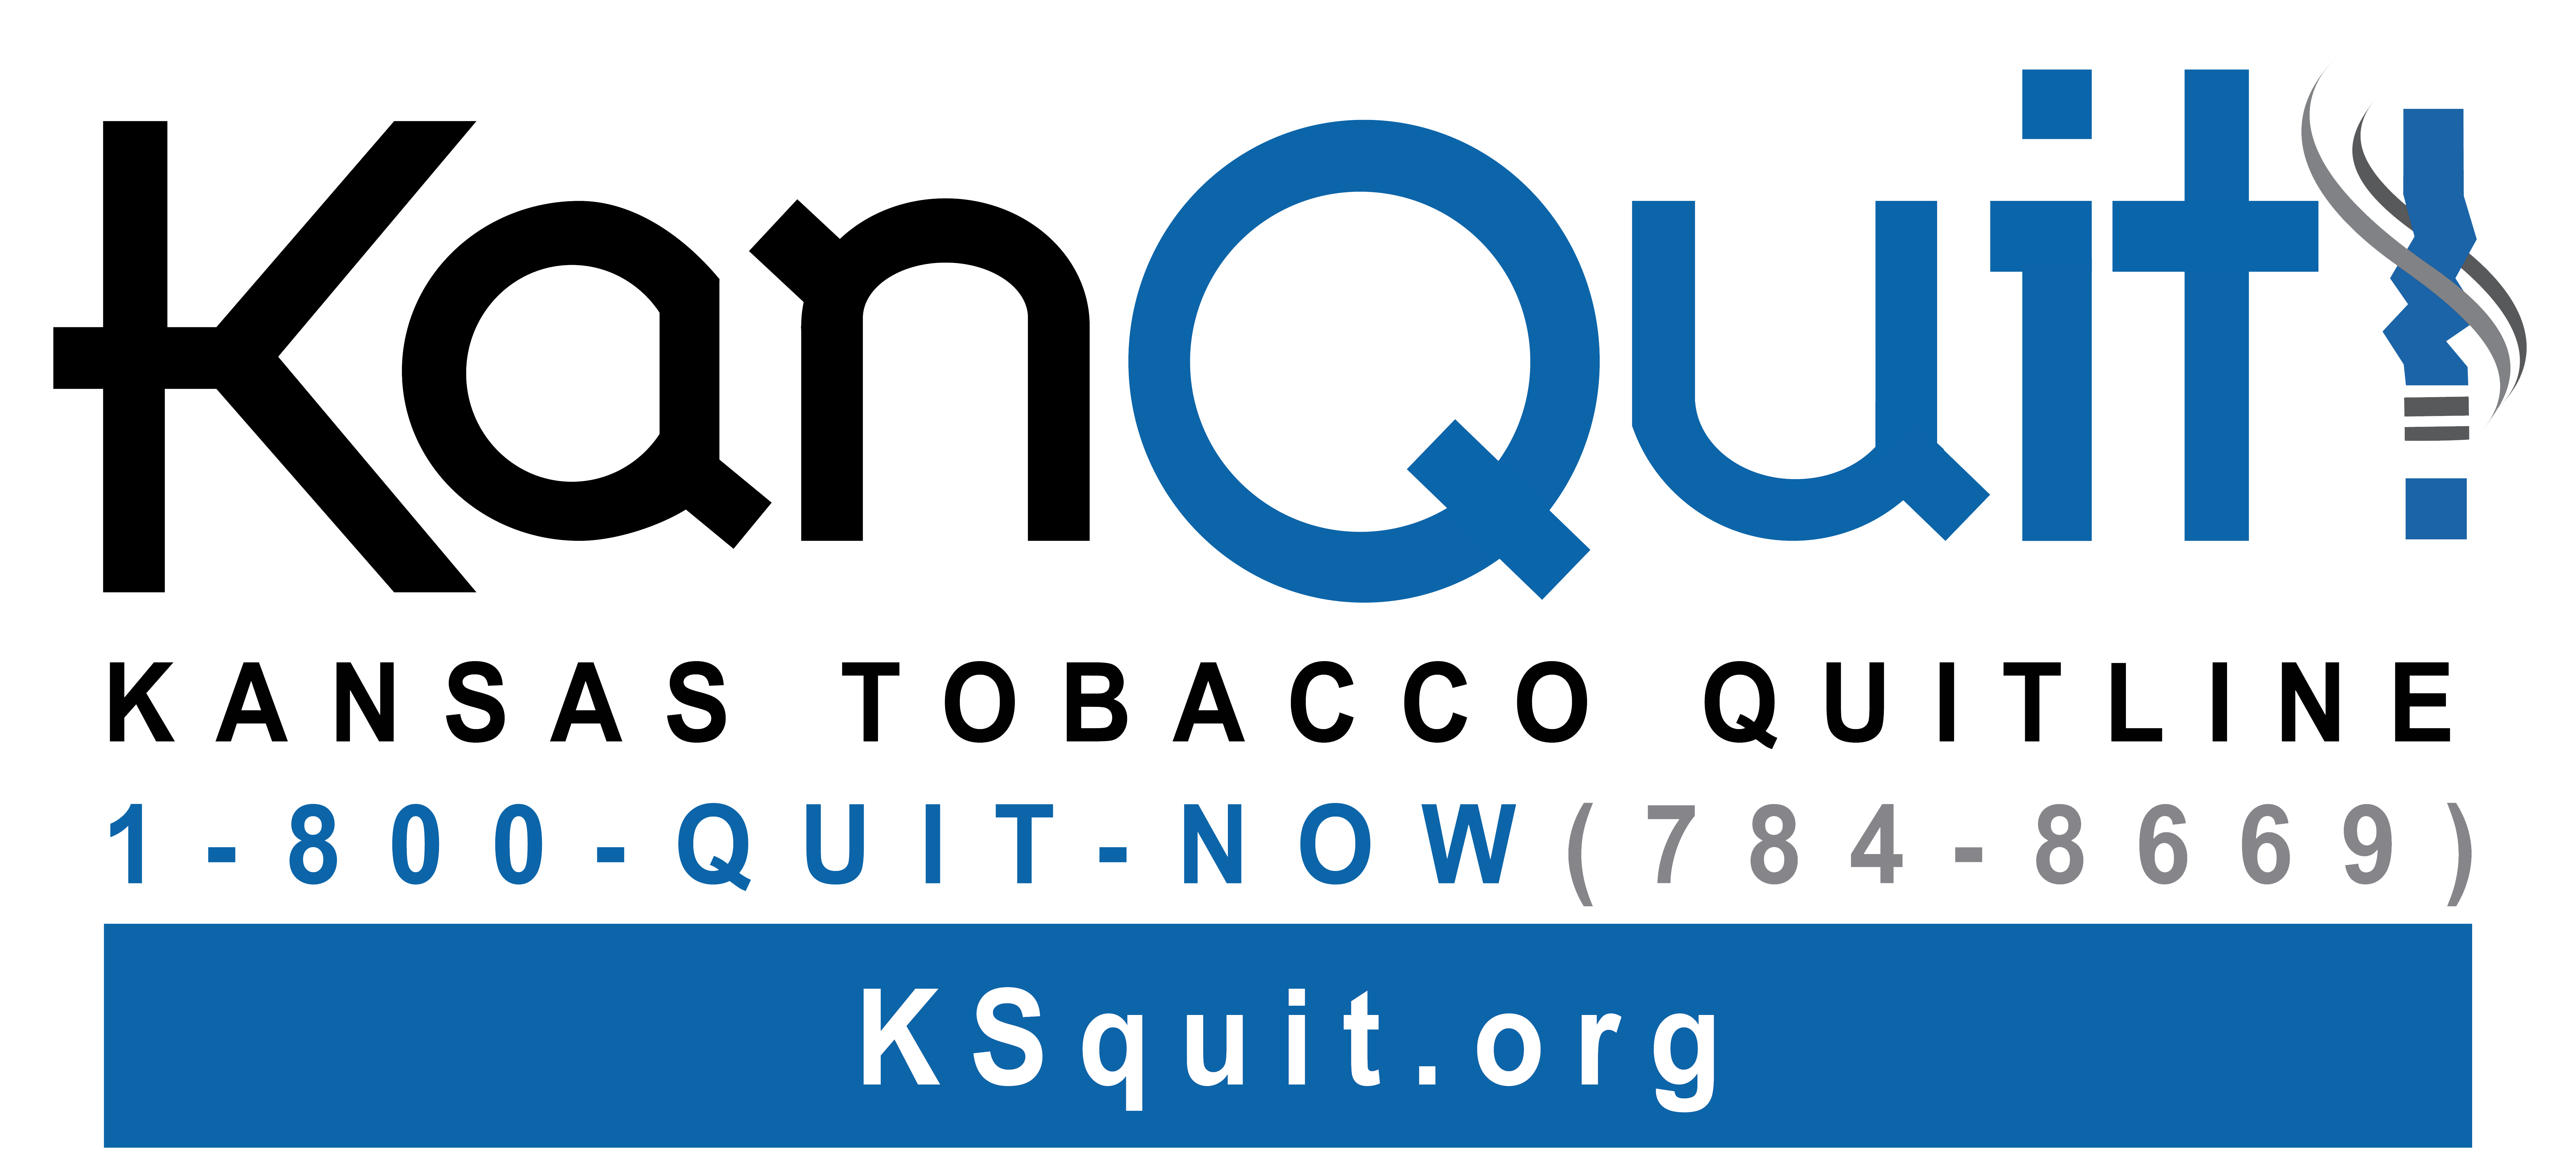 Kansas Quitline Logo activate to go to home